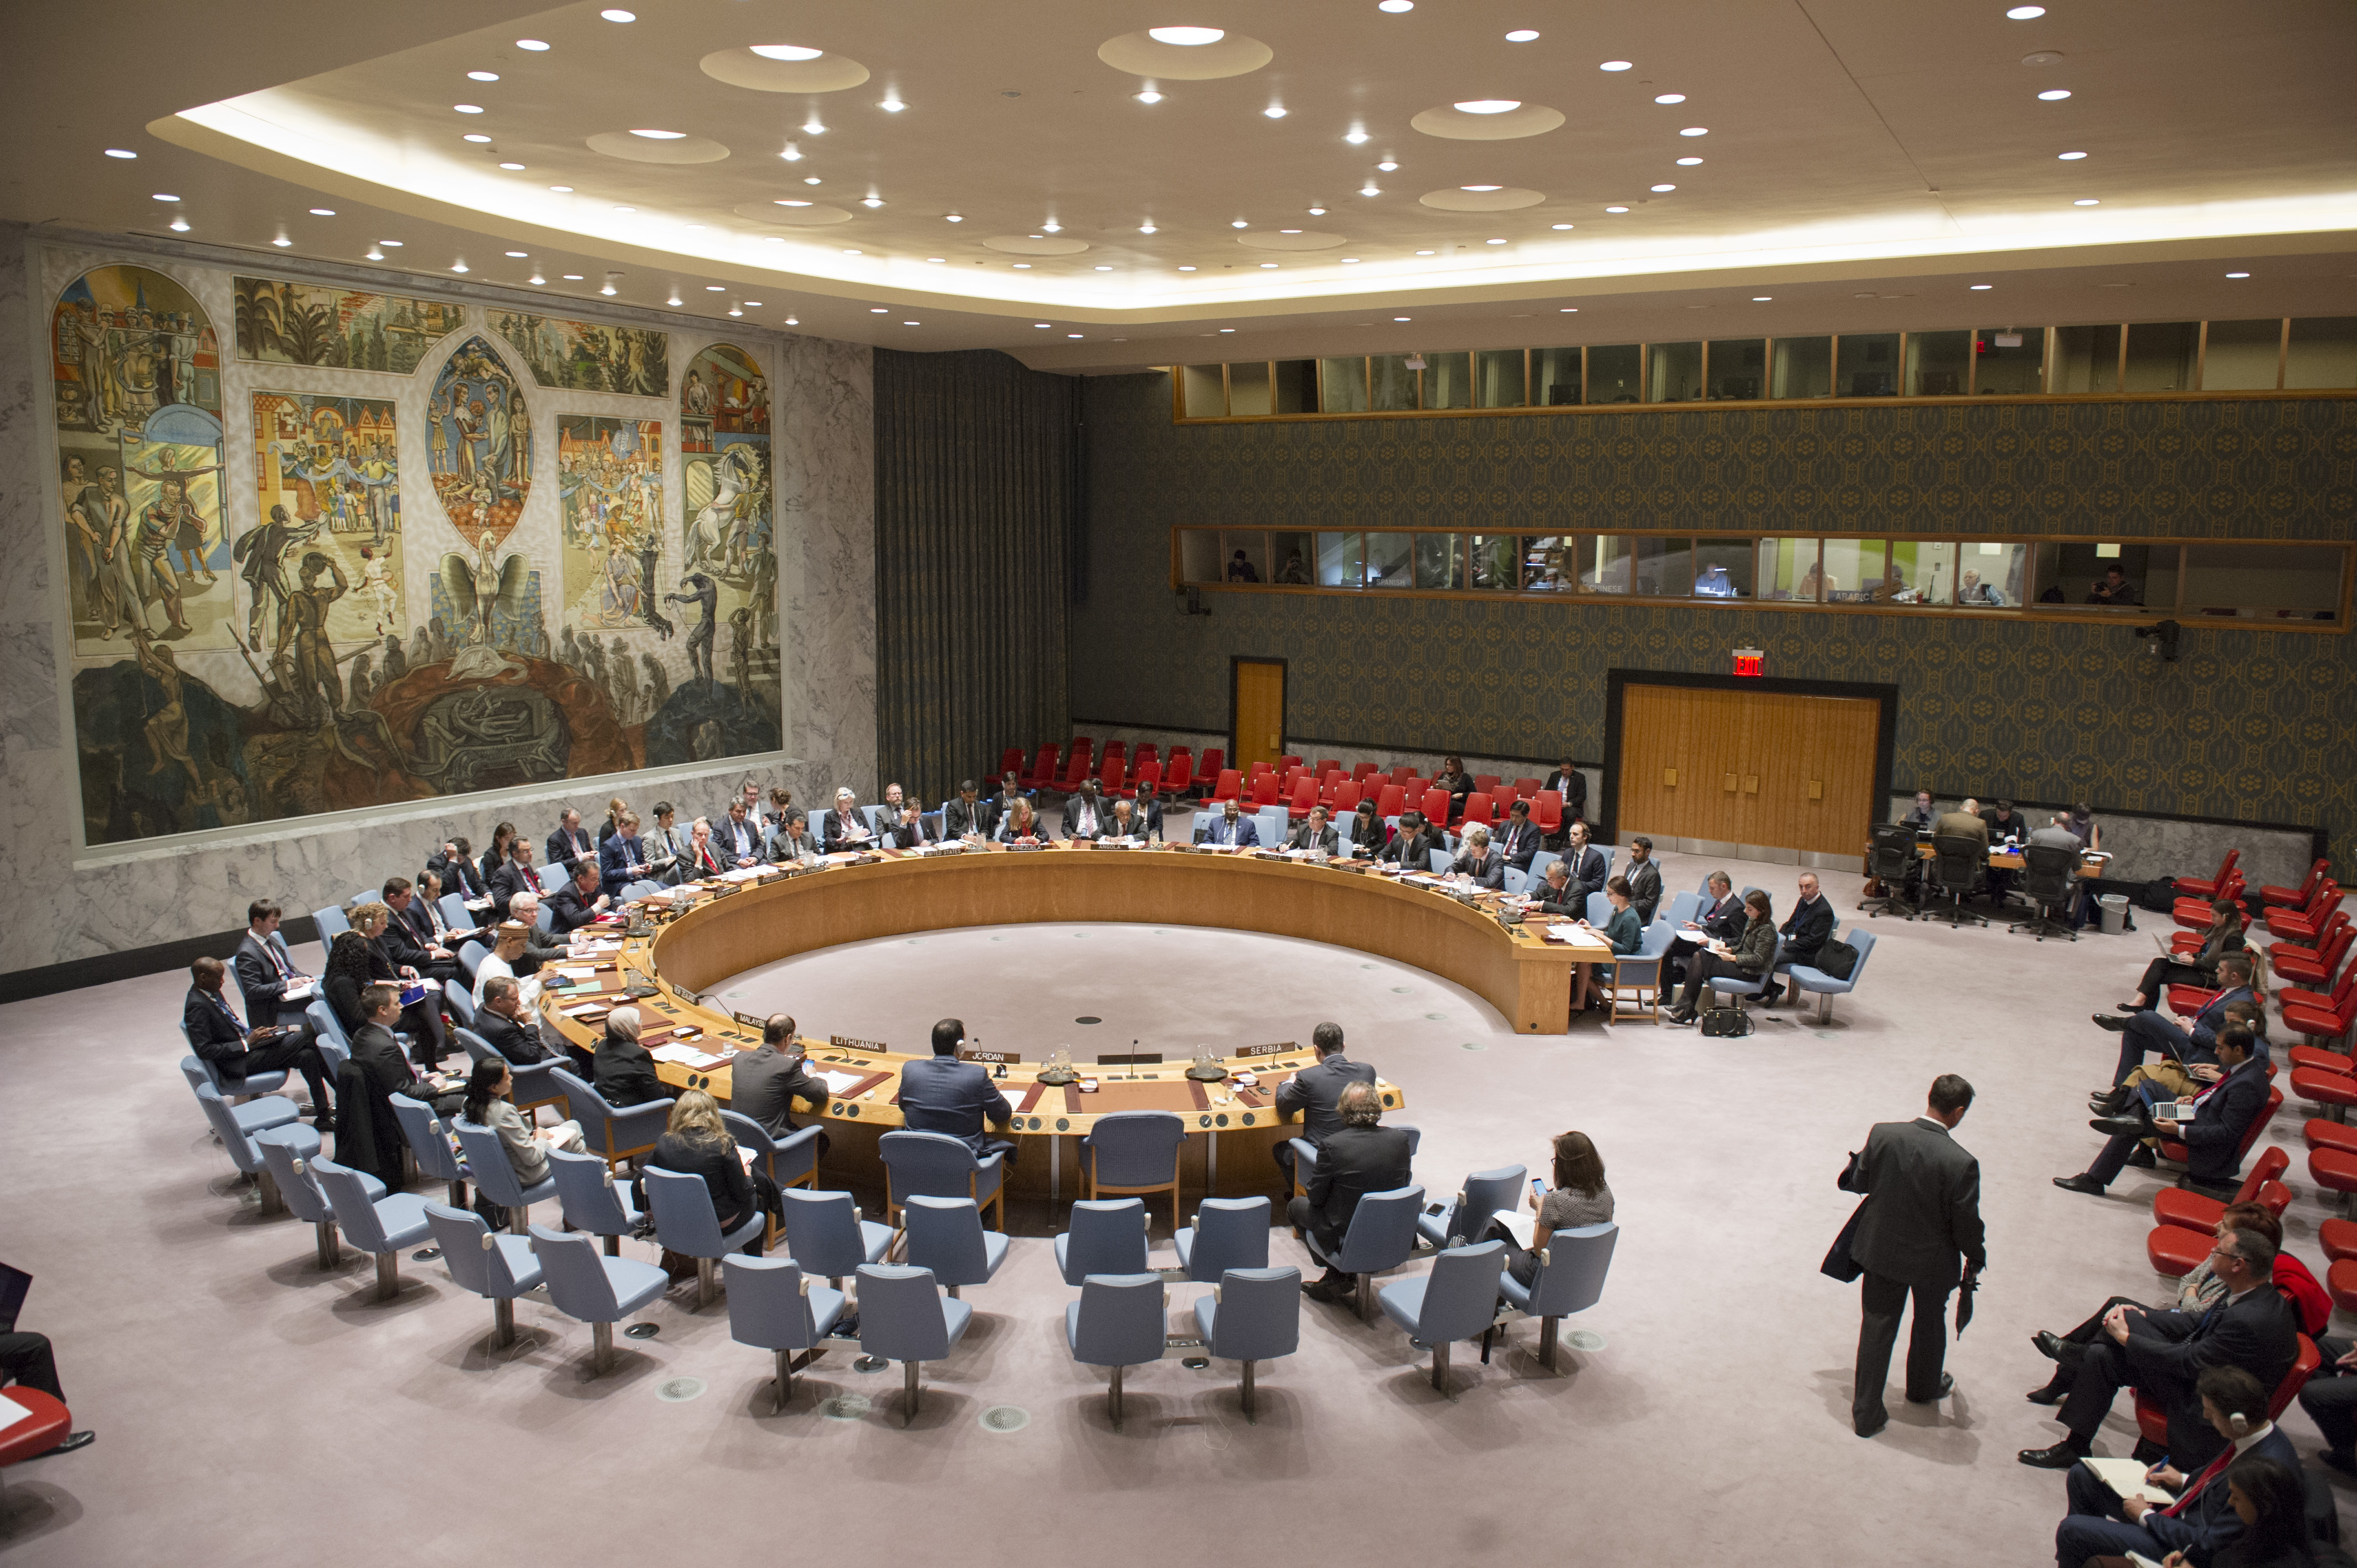 Р оон. Совет безопасности ООН РФ. Совбез ООН 2022. Совет безопасности ООН (сб). Генеральная Ассамблея ООН 2022.